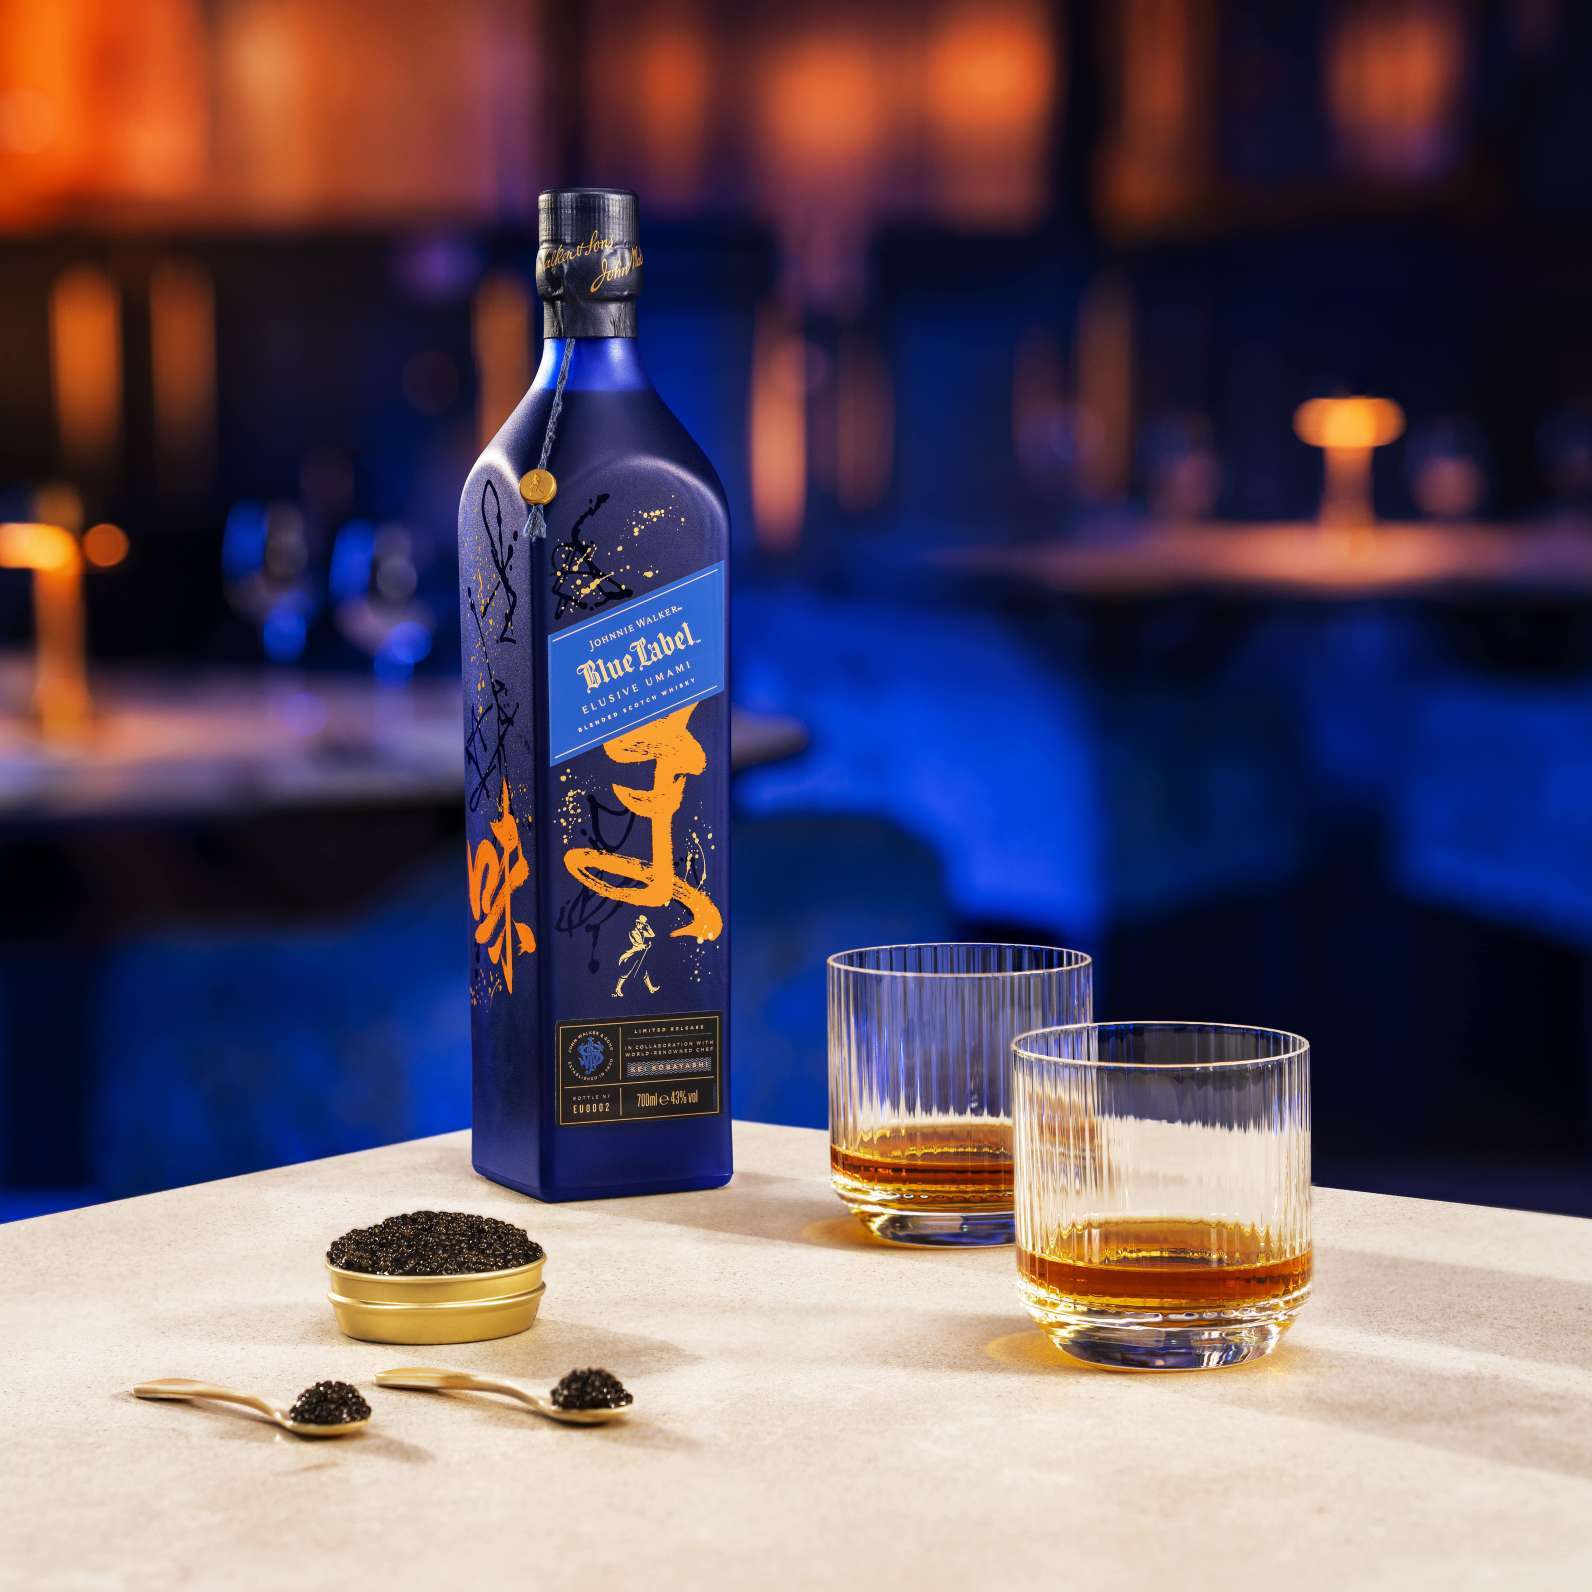 Johnnie Walker Blue Label Whisky Is Blend from Dormant